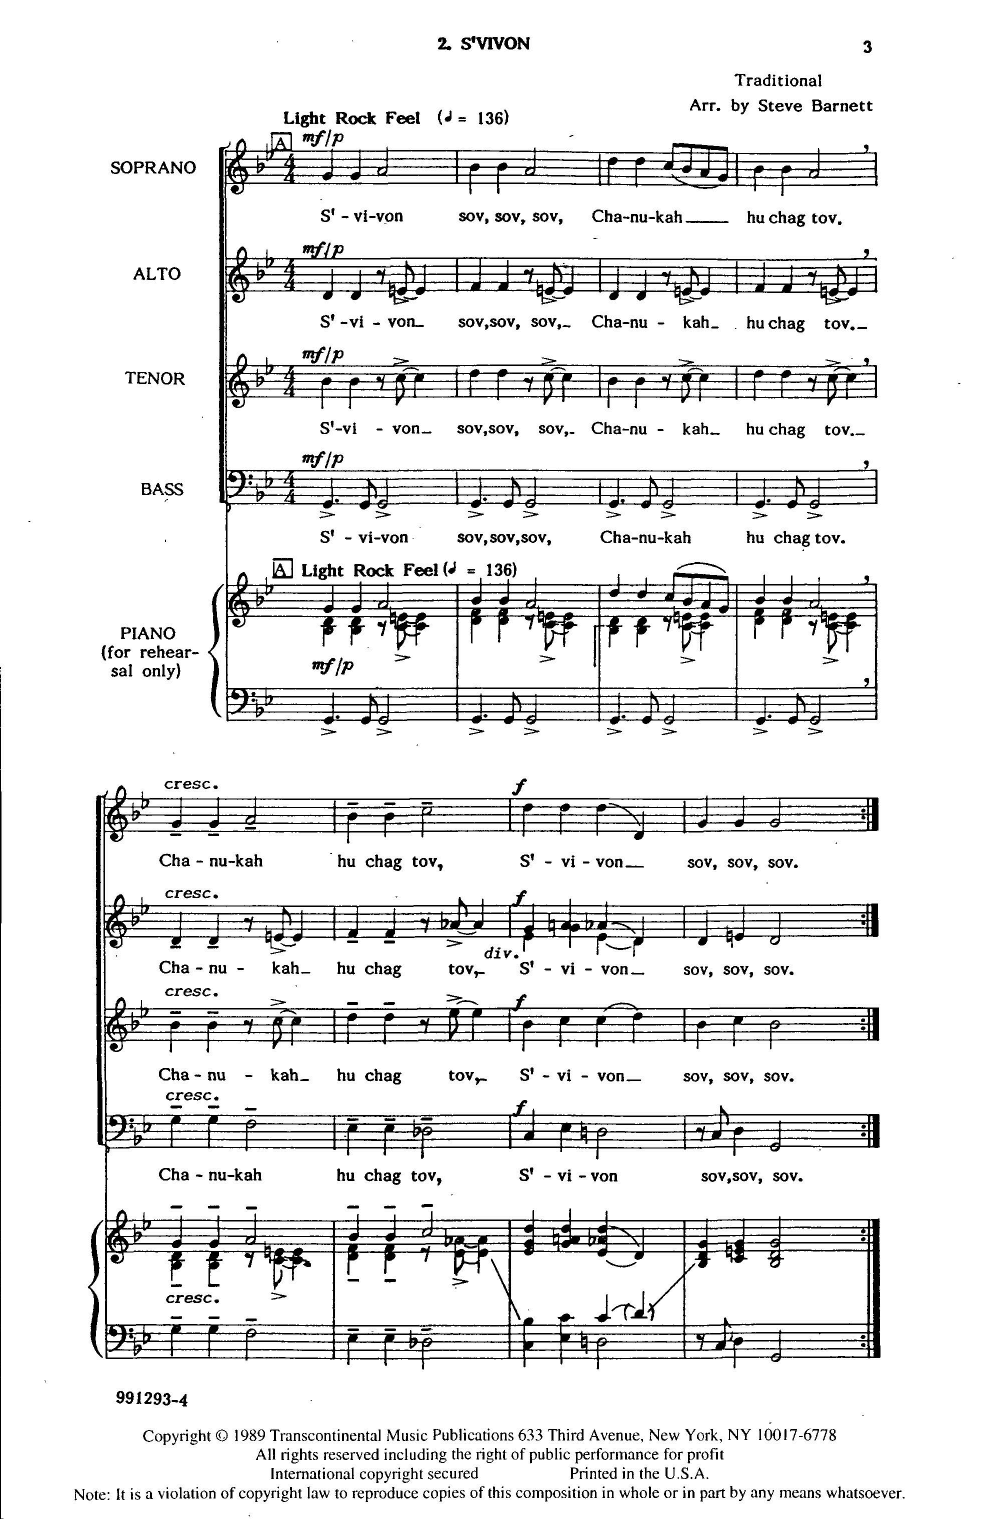 Steve Barnett S'vivon Rehearsal Piano Sheet Music Notes & Chords for SATB Choir - Download or Print PDF